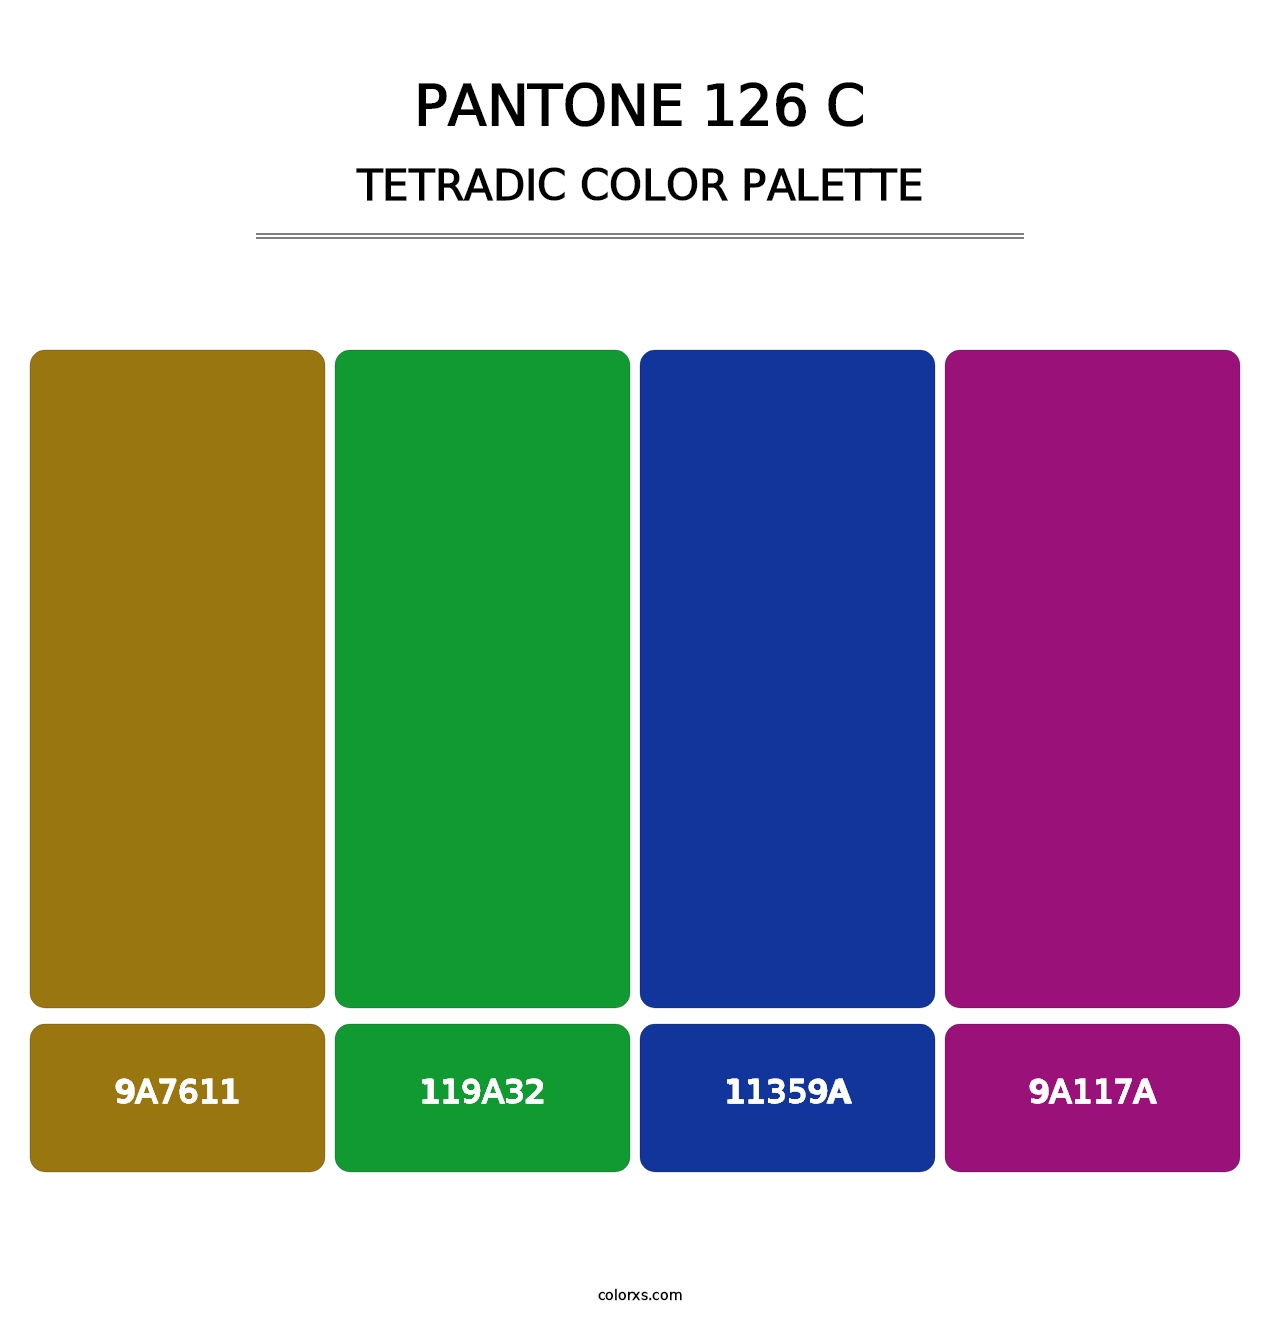 PANTONE 126 C - Tetradic Color Palette